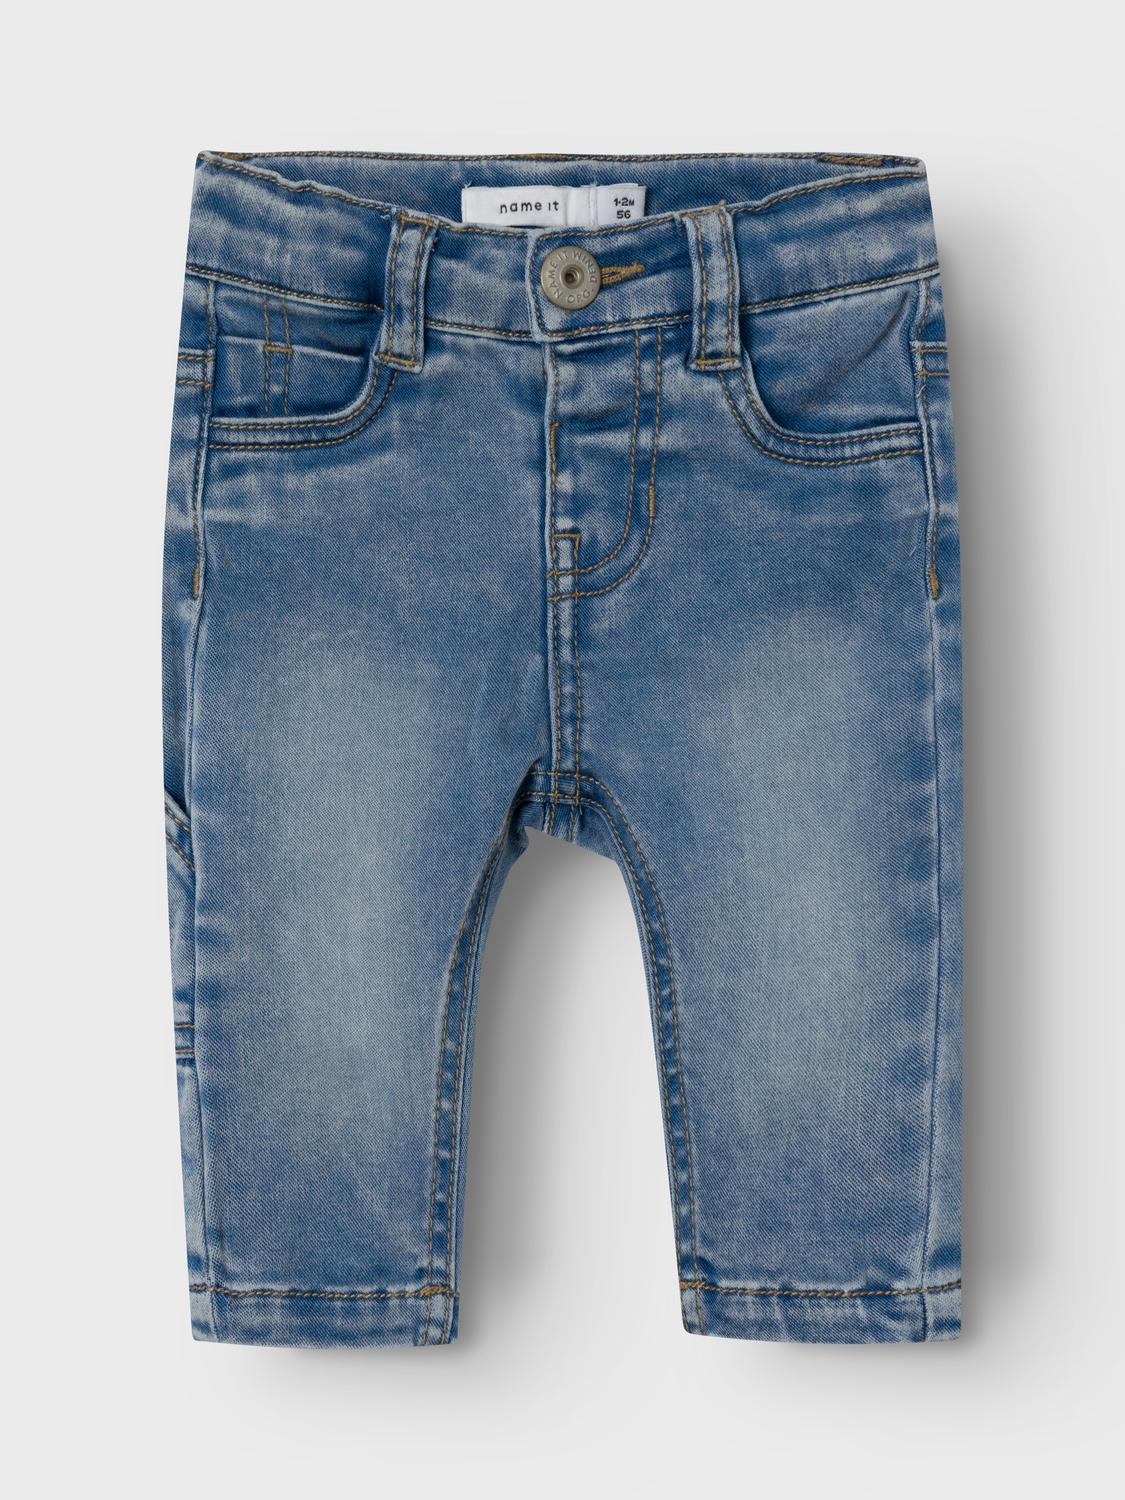 NBMSILAS Jeans - Light Blue Denim